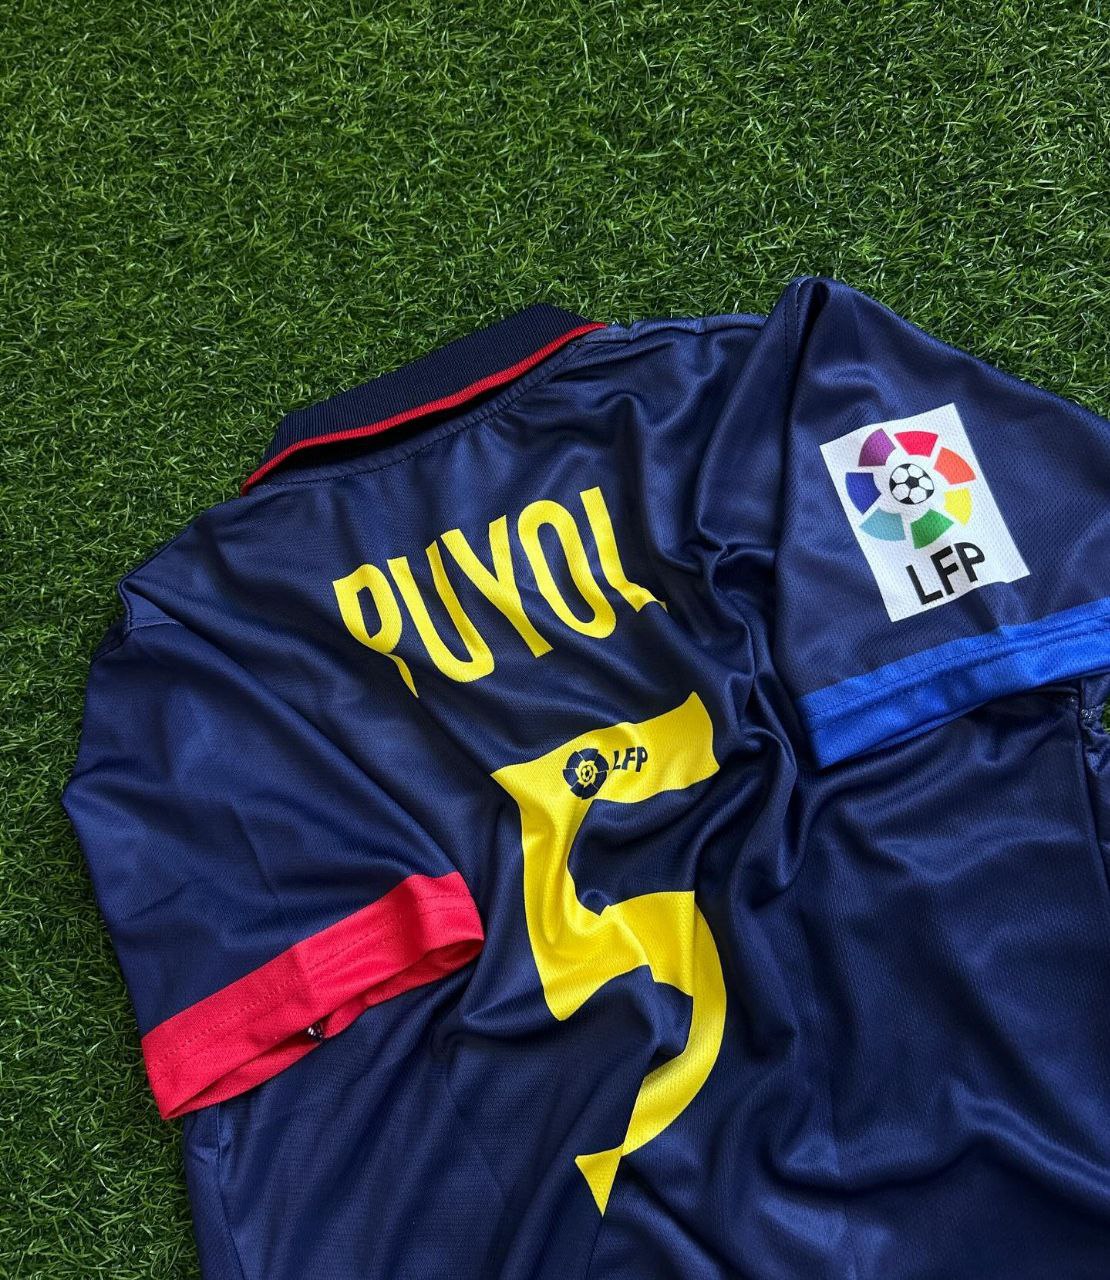 Carles Puyol Barcelona Retro Jersey